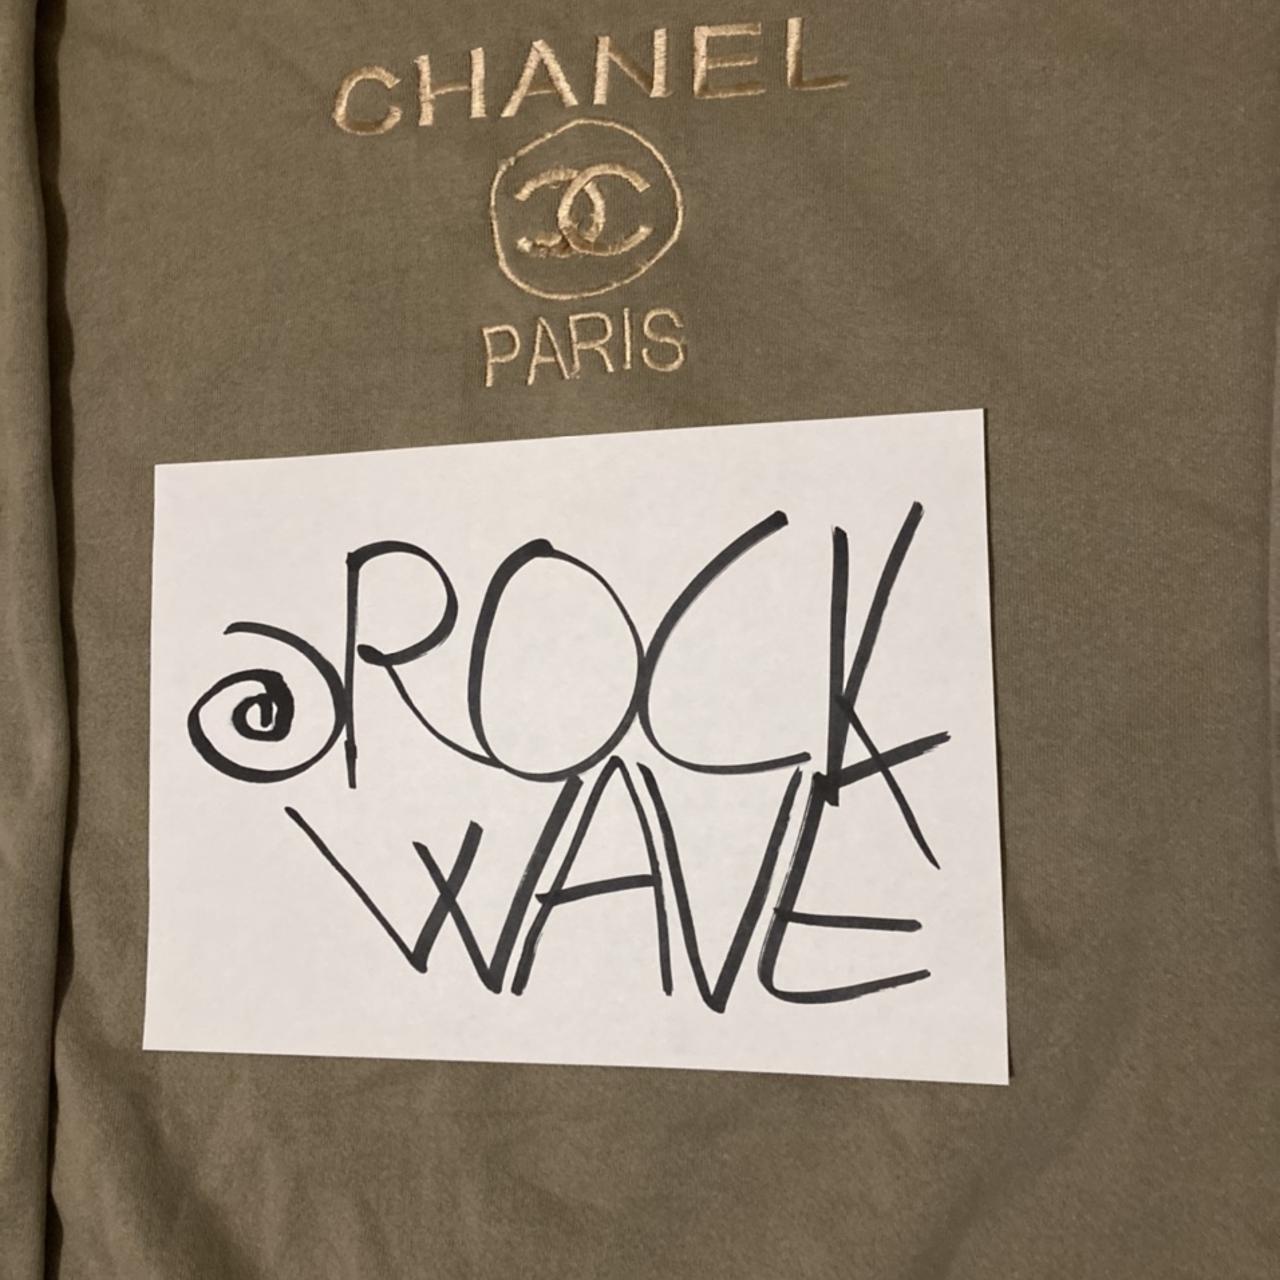 Authentic Chanel Vintage Chanel sweat-shirt/jumper... - Depop